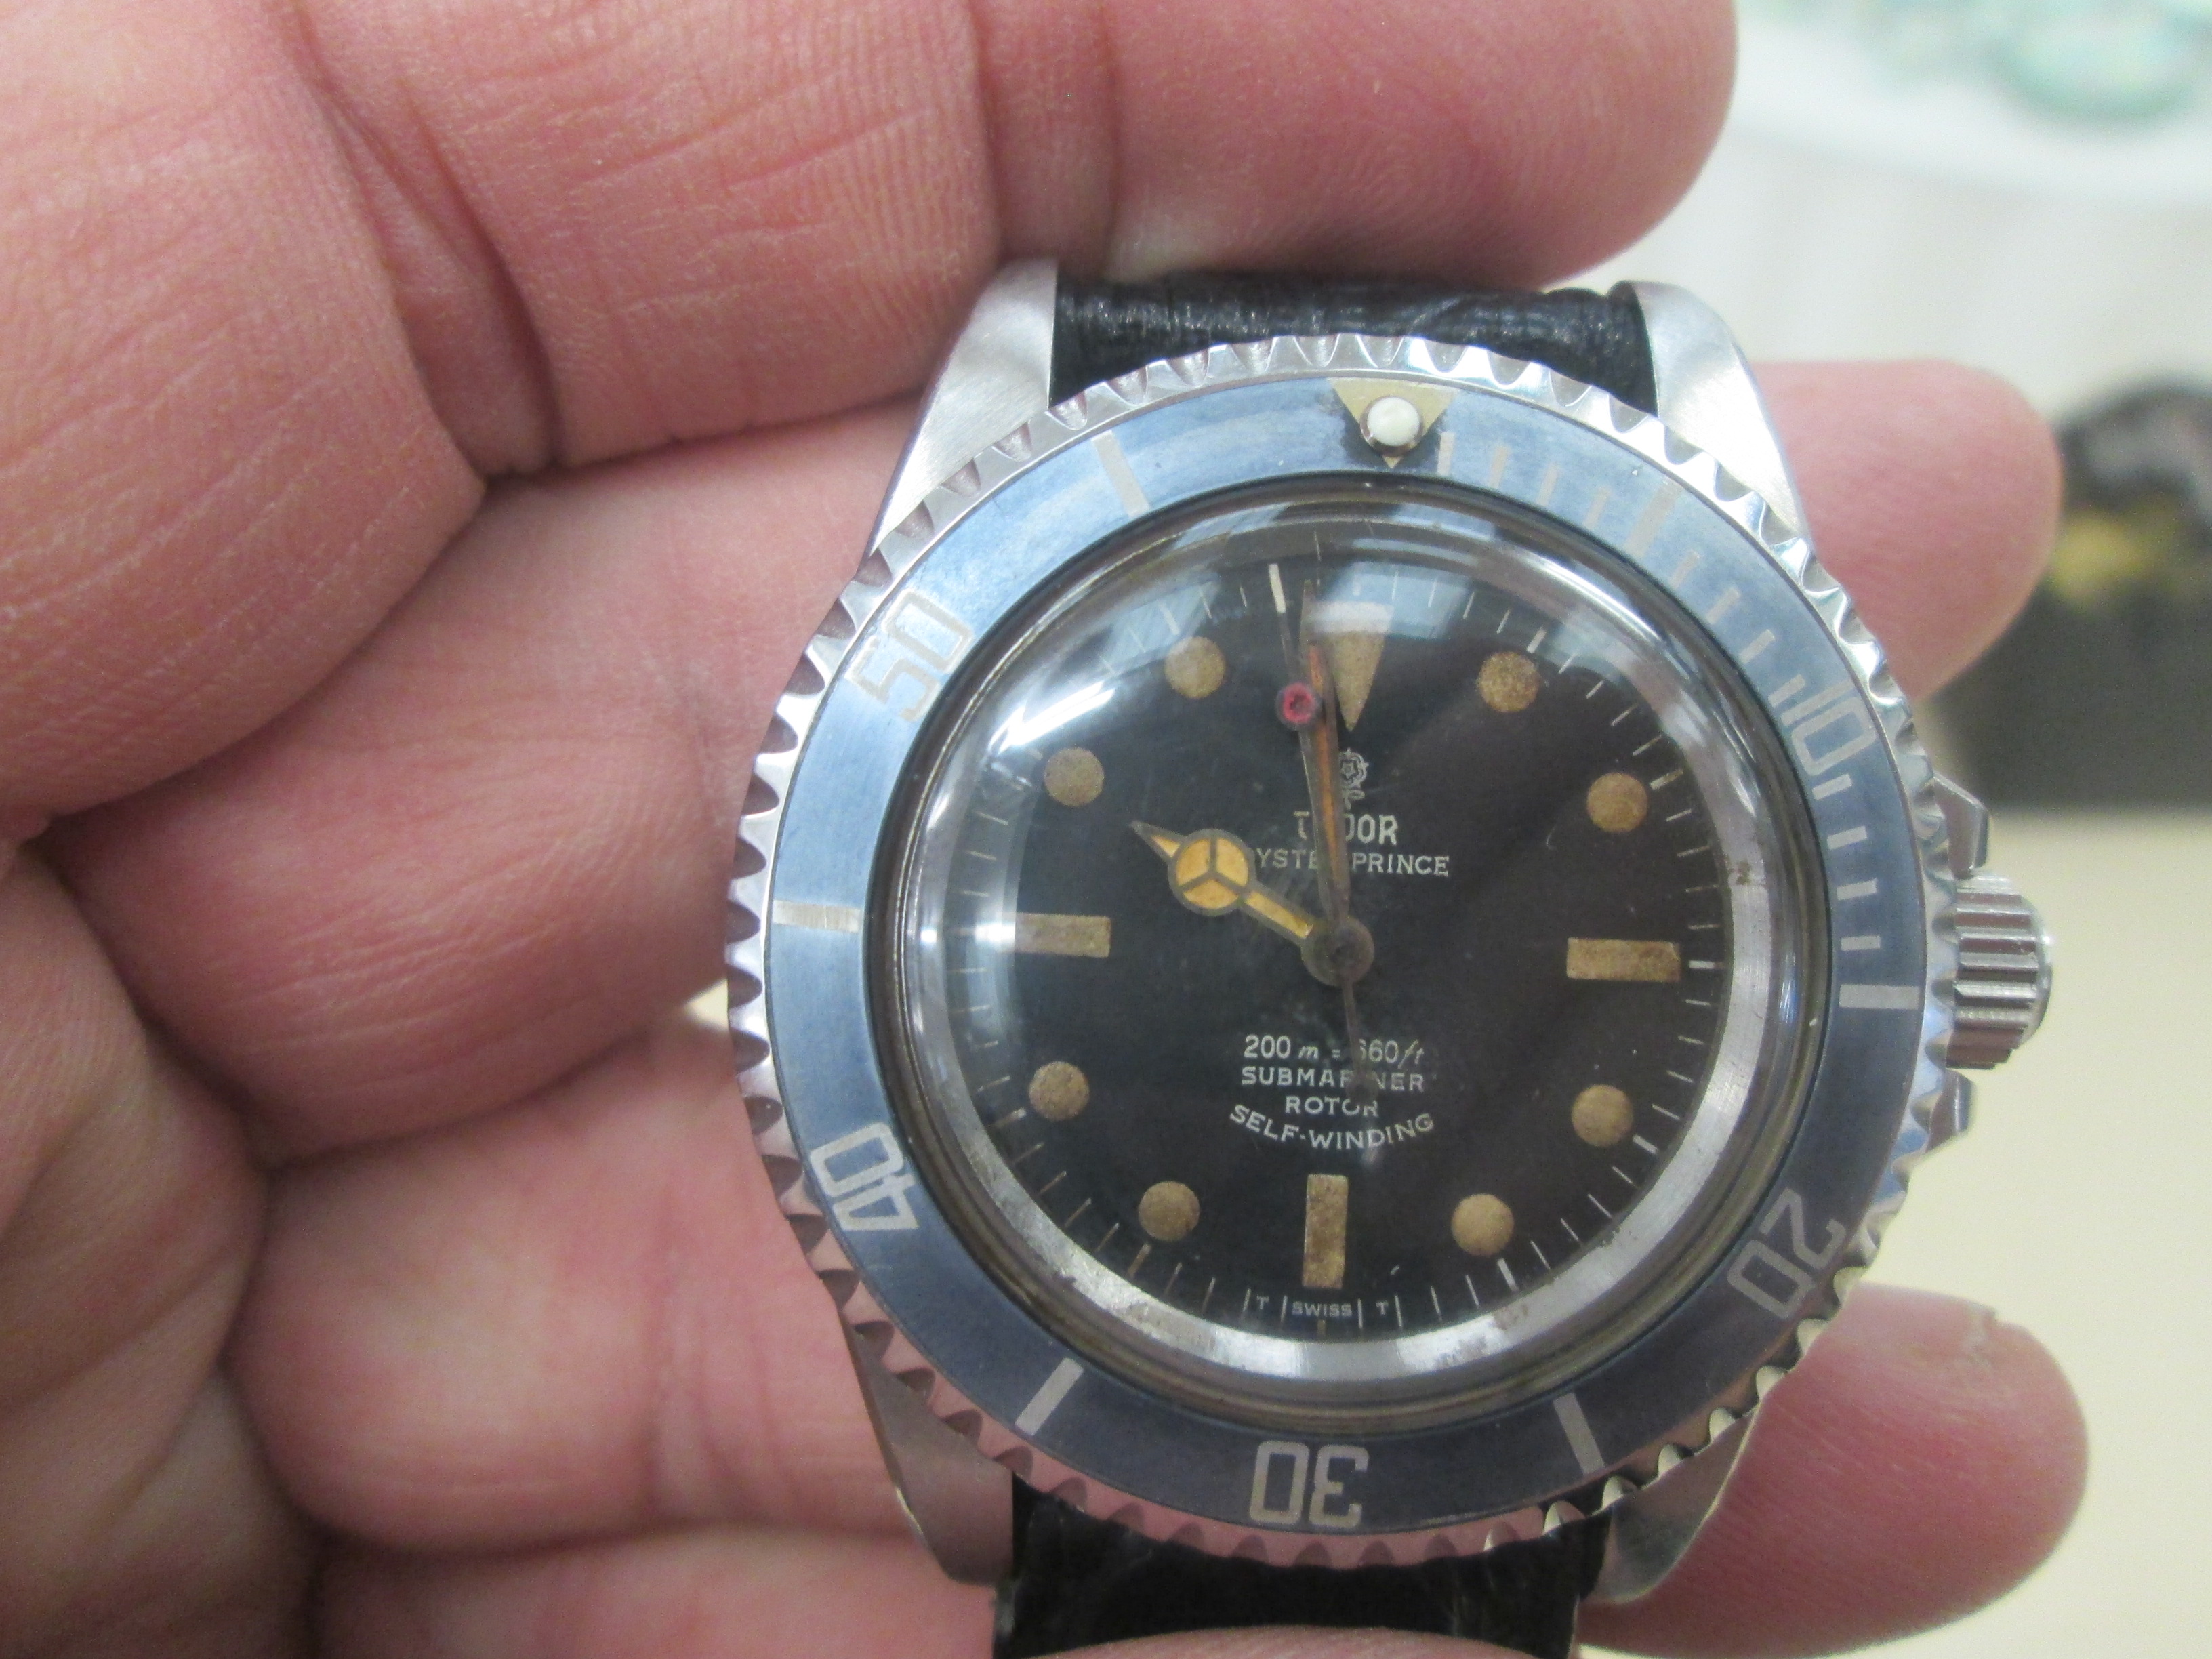 A Tudor gentleman's Submariner watch: rotor self-winding, - Image 14 of 17